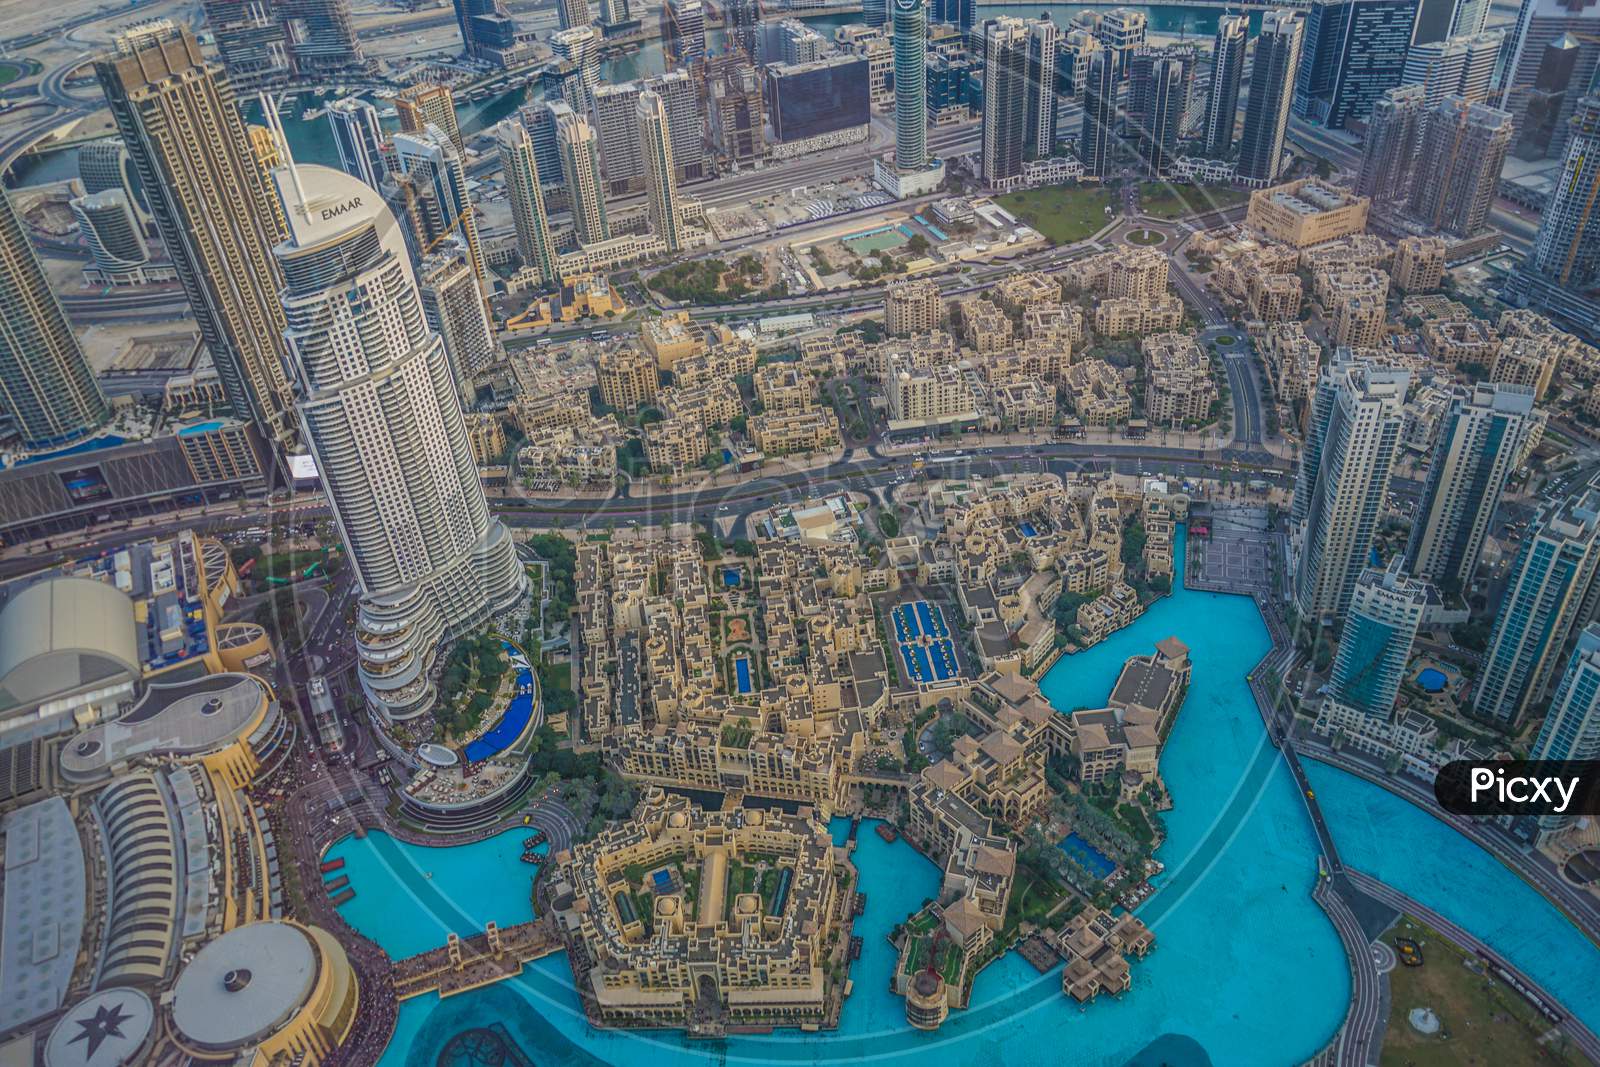 Dubai Skyline As Seen From Burj Khalifa Observation Deck